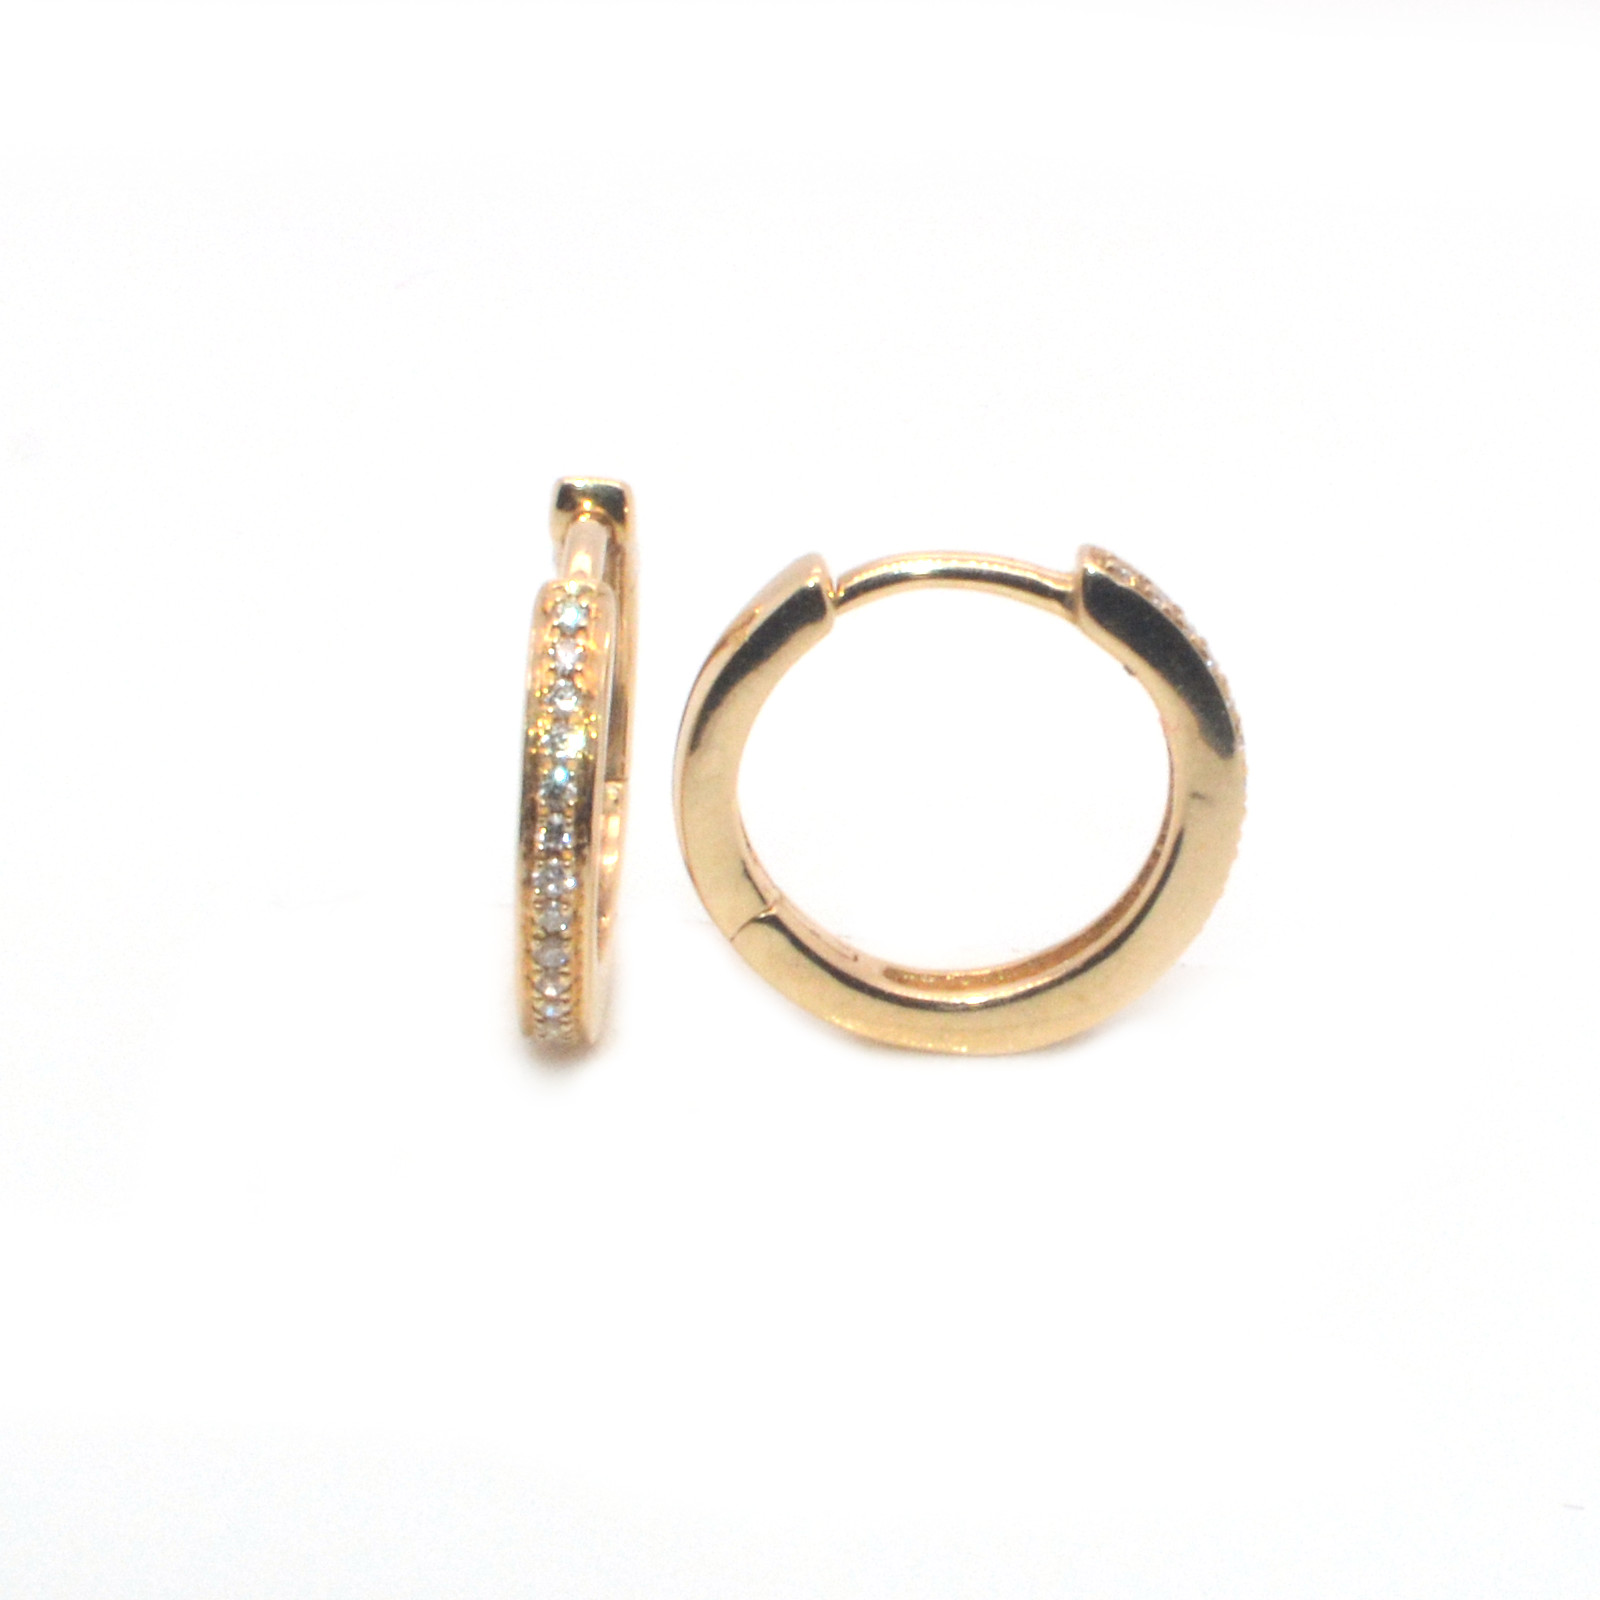 Buy 0.12 Carat Diamond huggie earring in 14k yellow gold | BestinGems